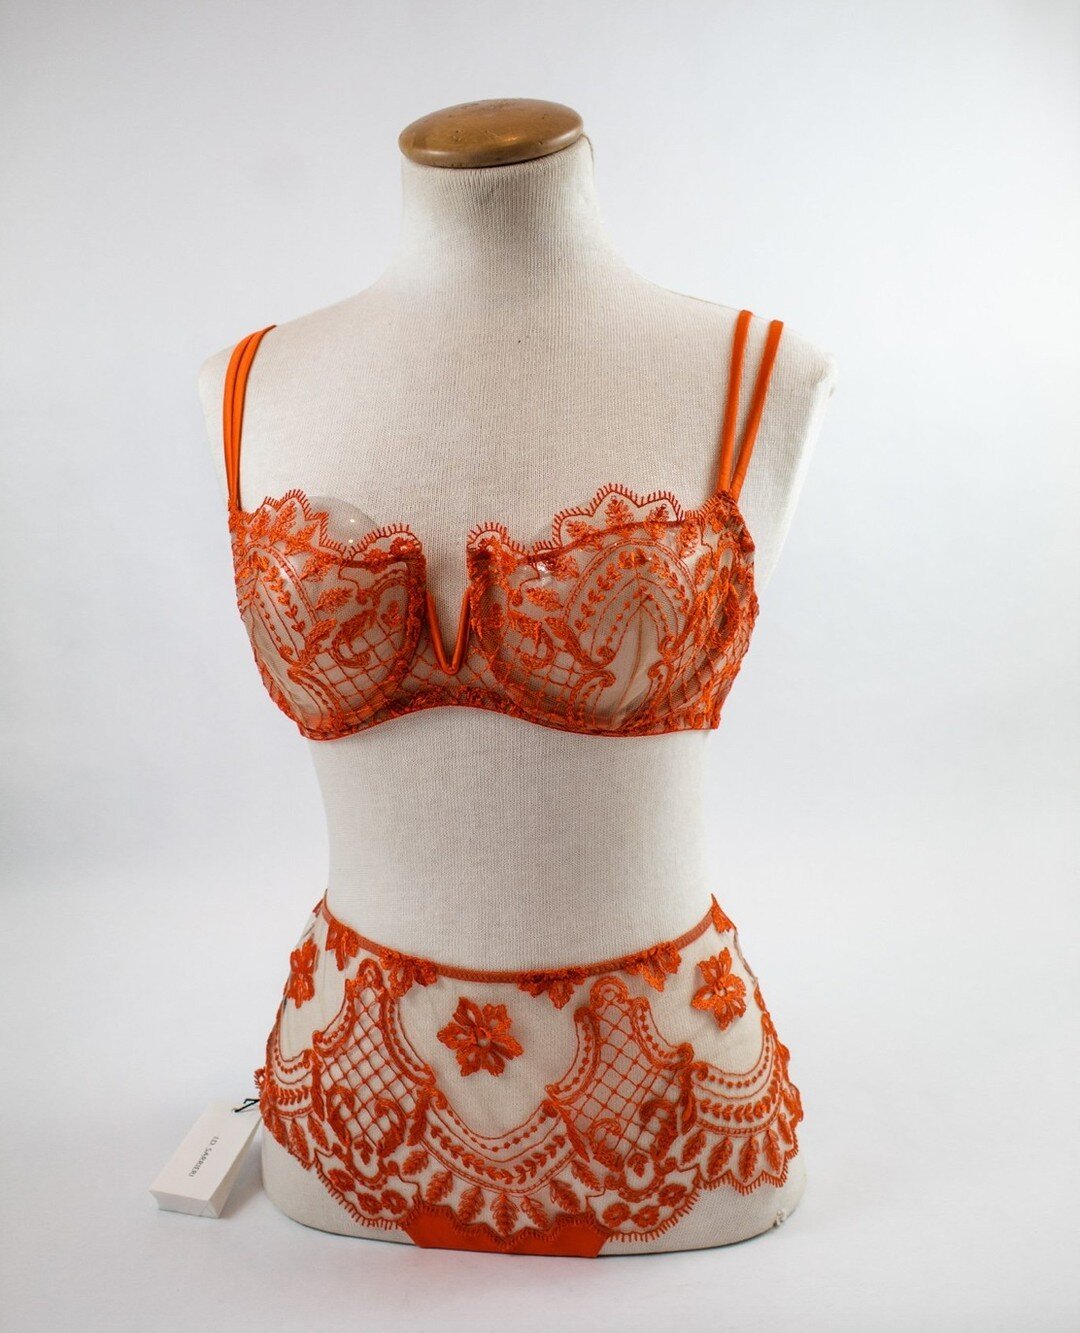 Orange Bra with Demi Cup ✨Designed by I.D. Sarrieri⁠
⁠
Tap the link in bio to #ShopJaryam ⁠
.⁠
.⁠
.⁠
.⁠
#lingerie #lingerieboutique #washingtondc #georgetowndc #shopsmall #shoplocal #idsarrieri #lingerielover #lingerieaddict